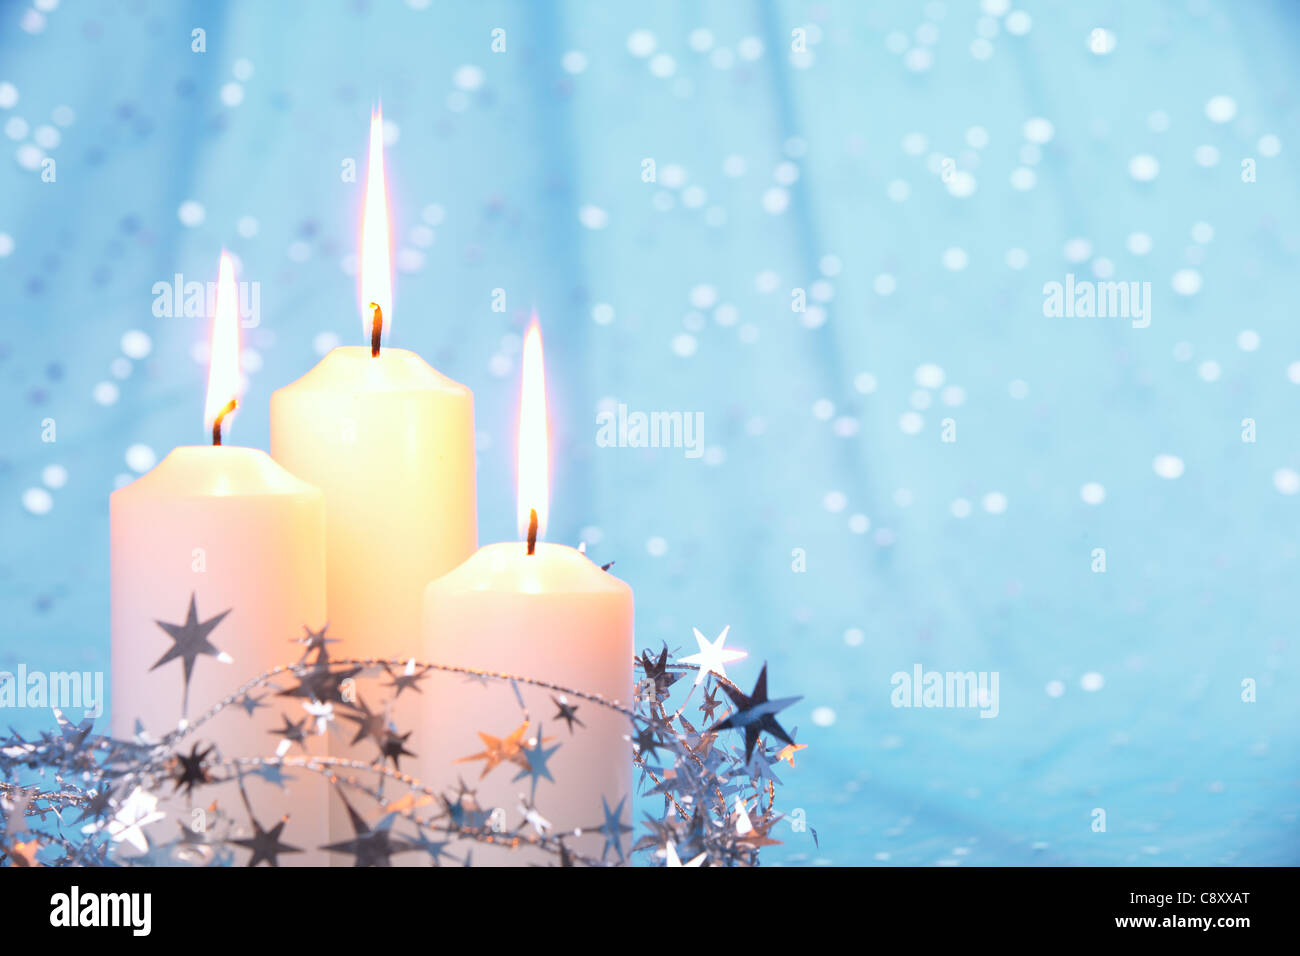 Burning candles with Christmas decoration Stock Photo